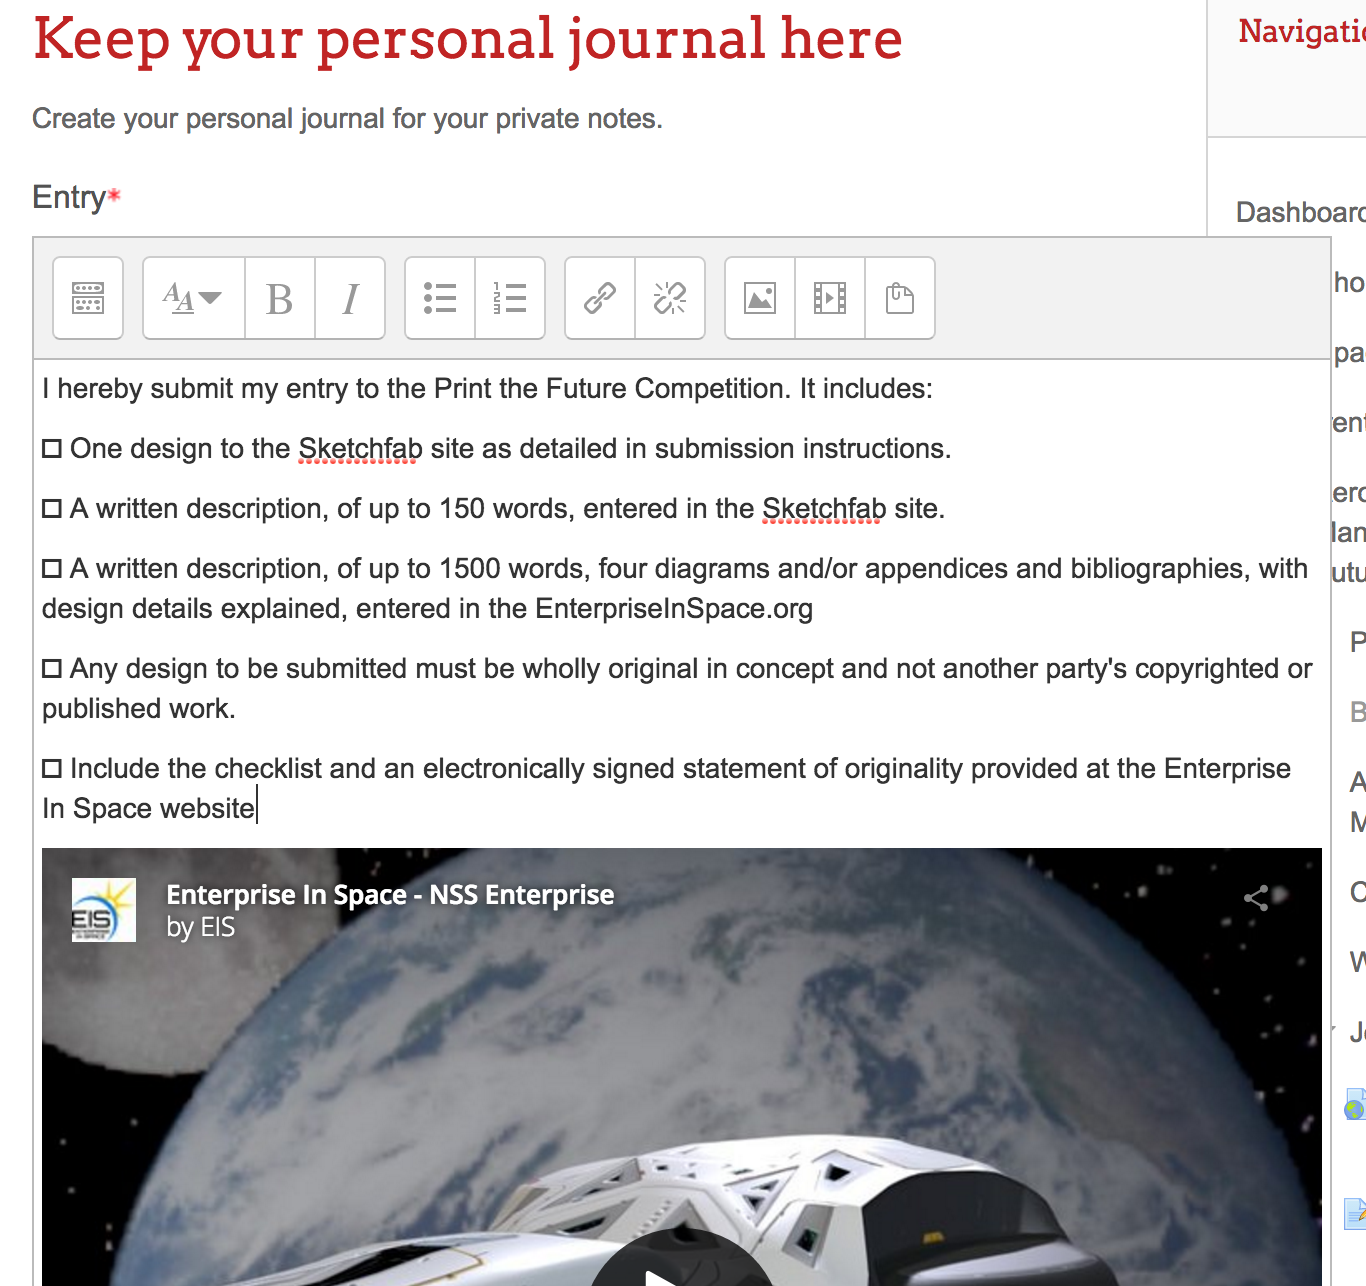 A screenshot of a journal entry on EIS Academy